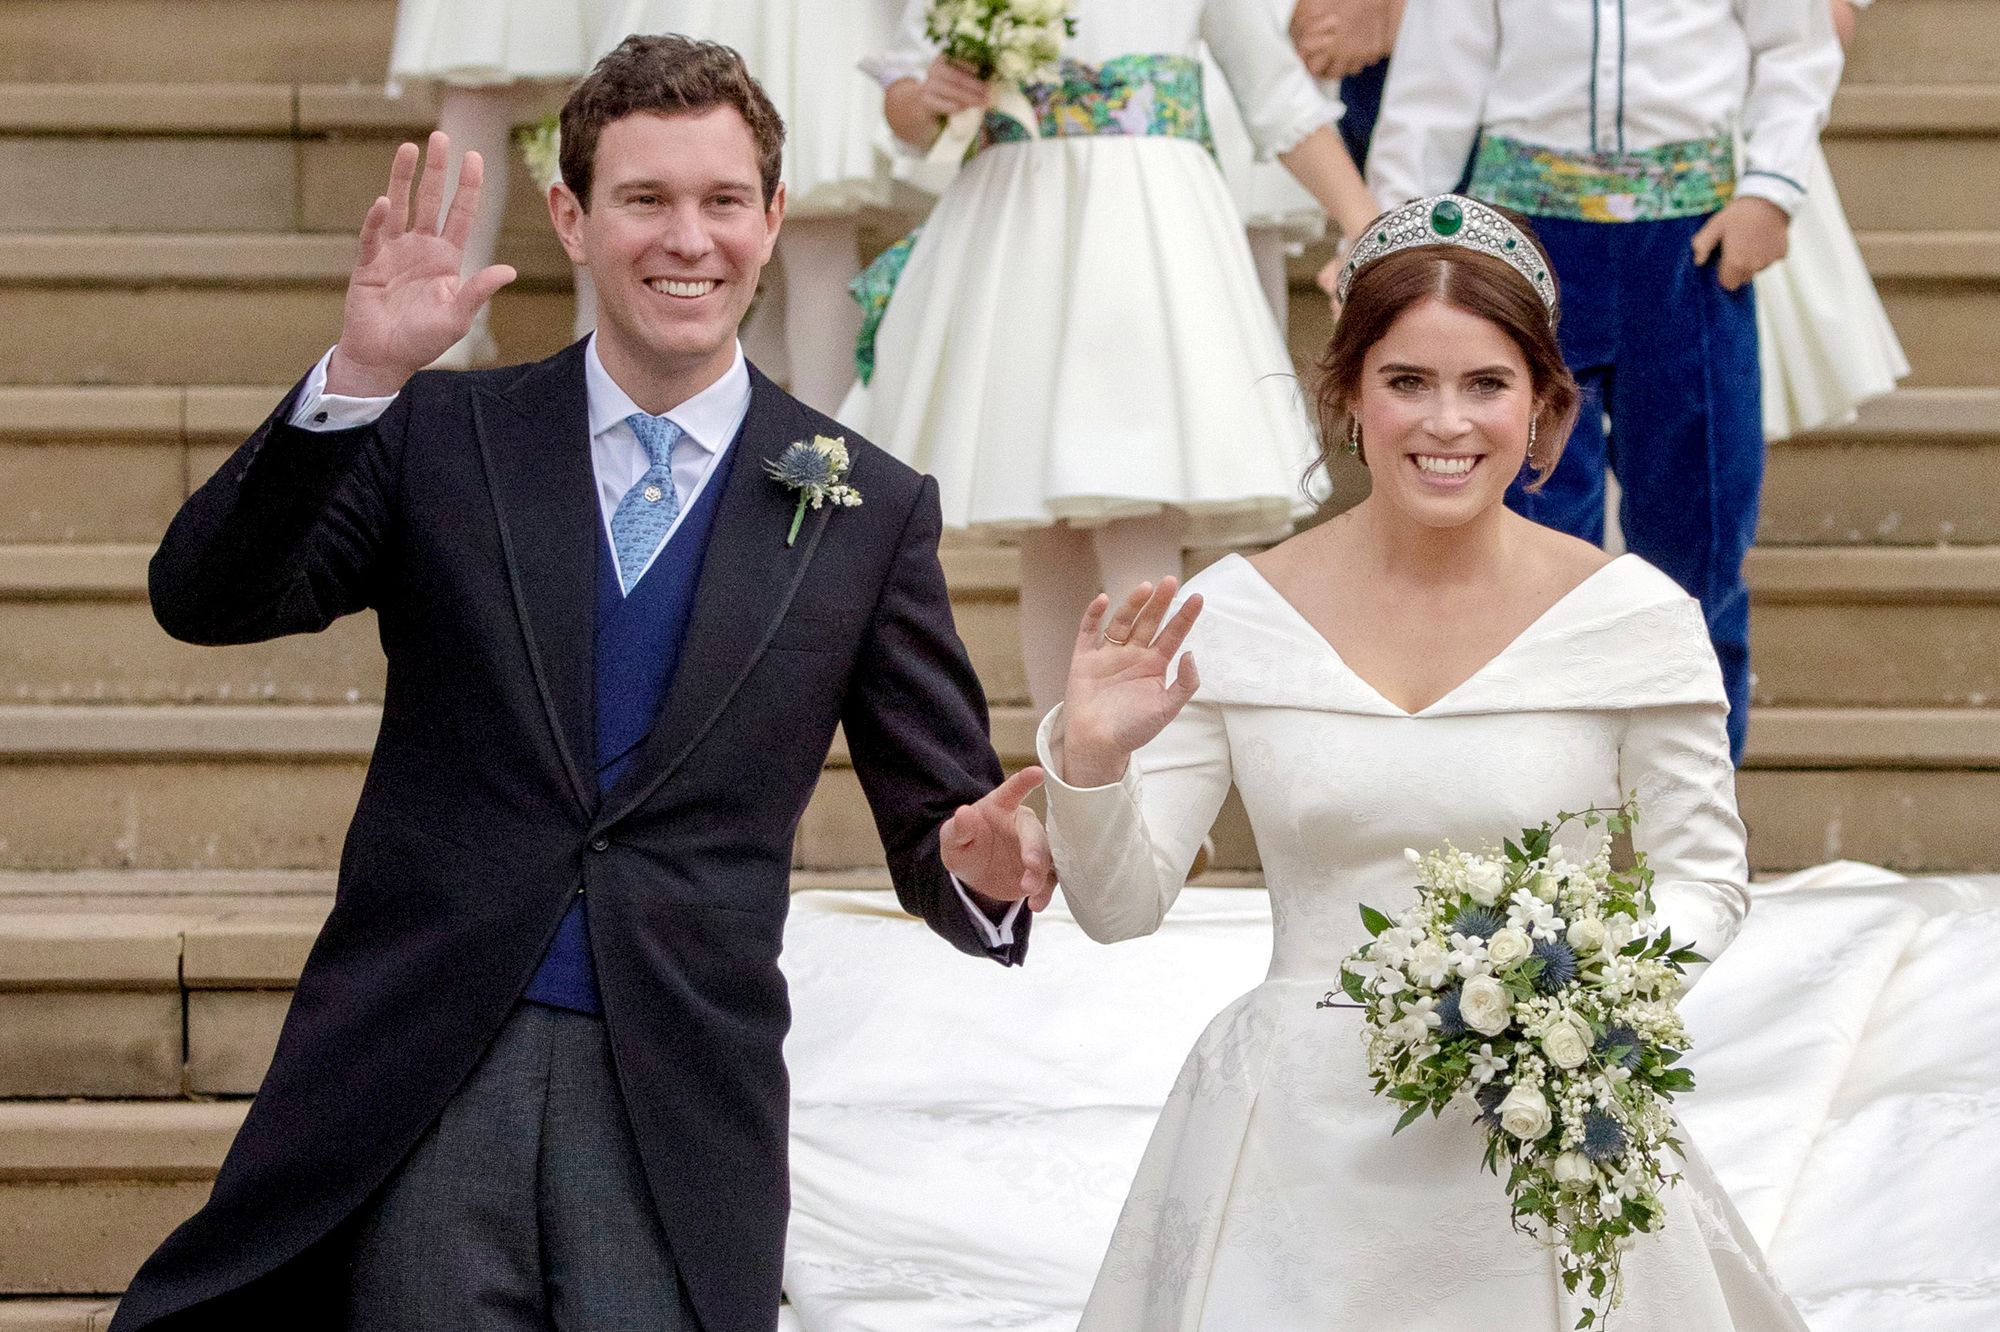  Mariage princesse Eugénie et Jack Brooksban @Reuters